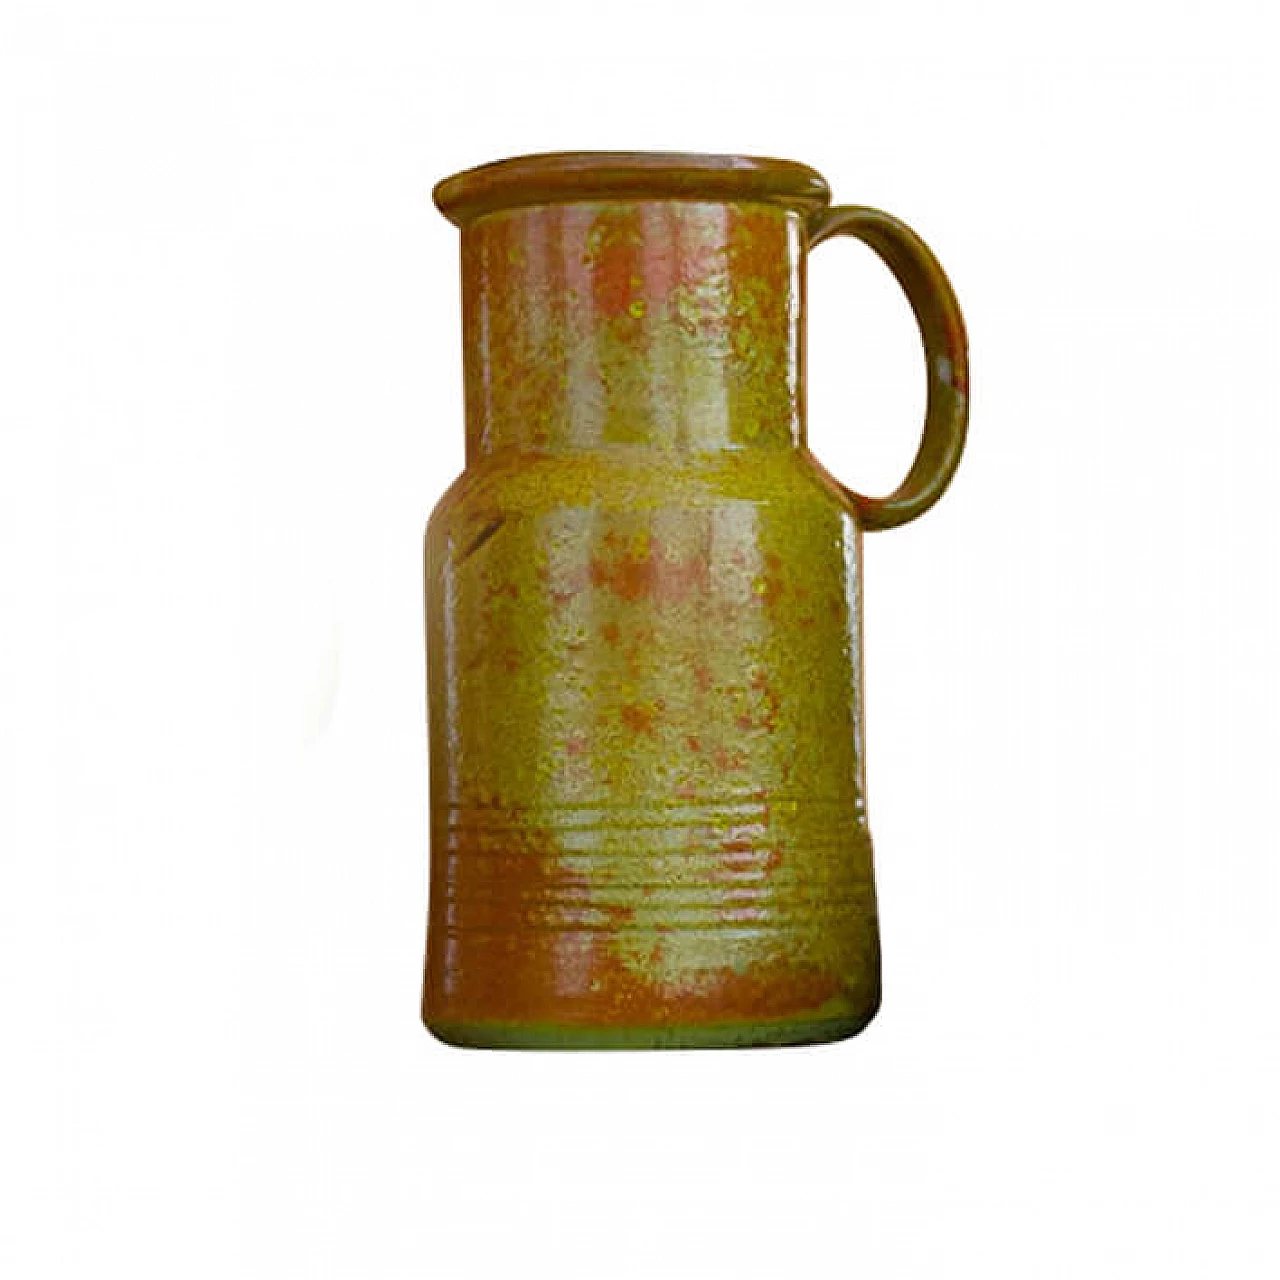 Caraffa in ceramica di Alessio Tasca, anni '60 1283881